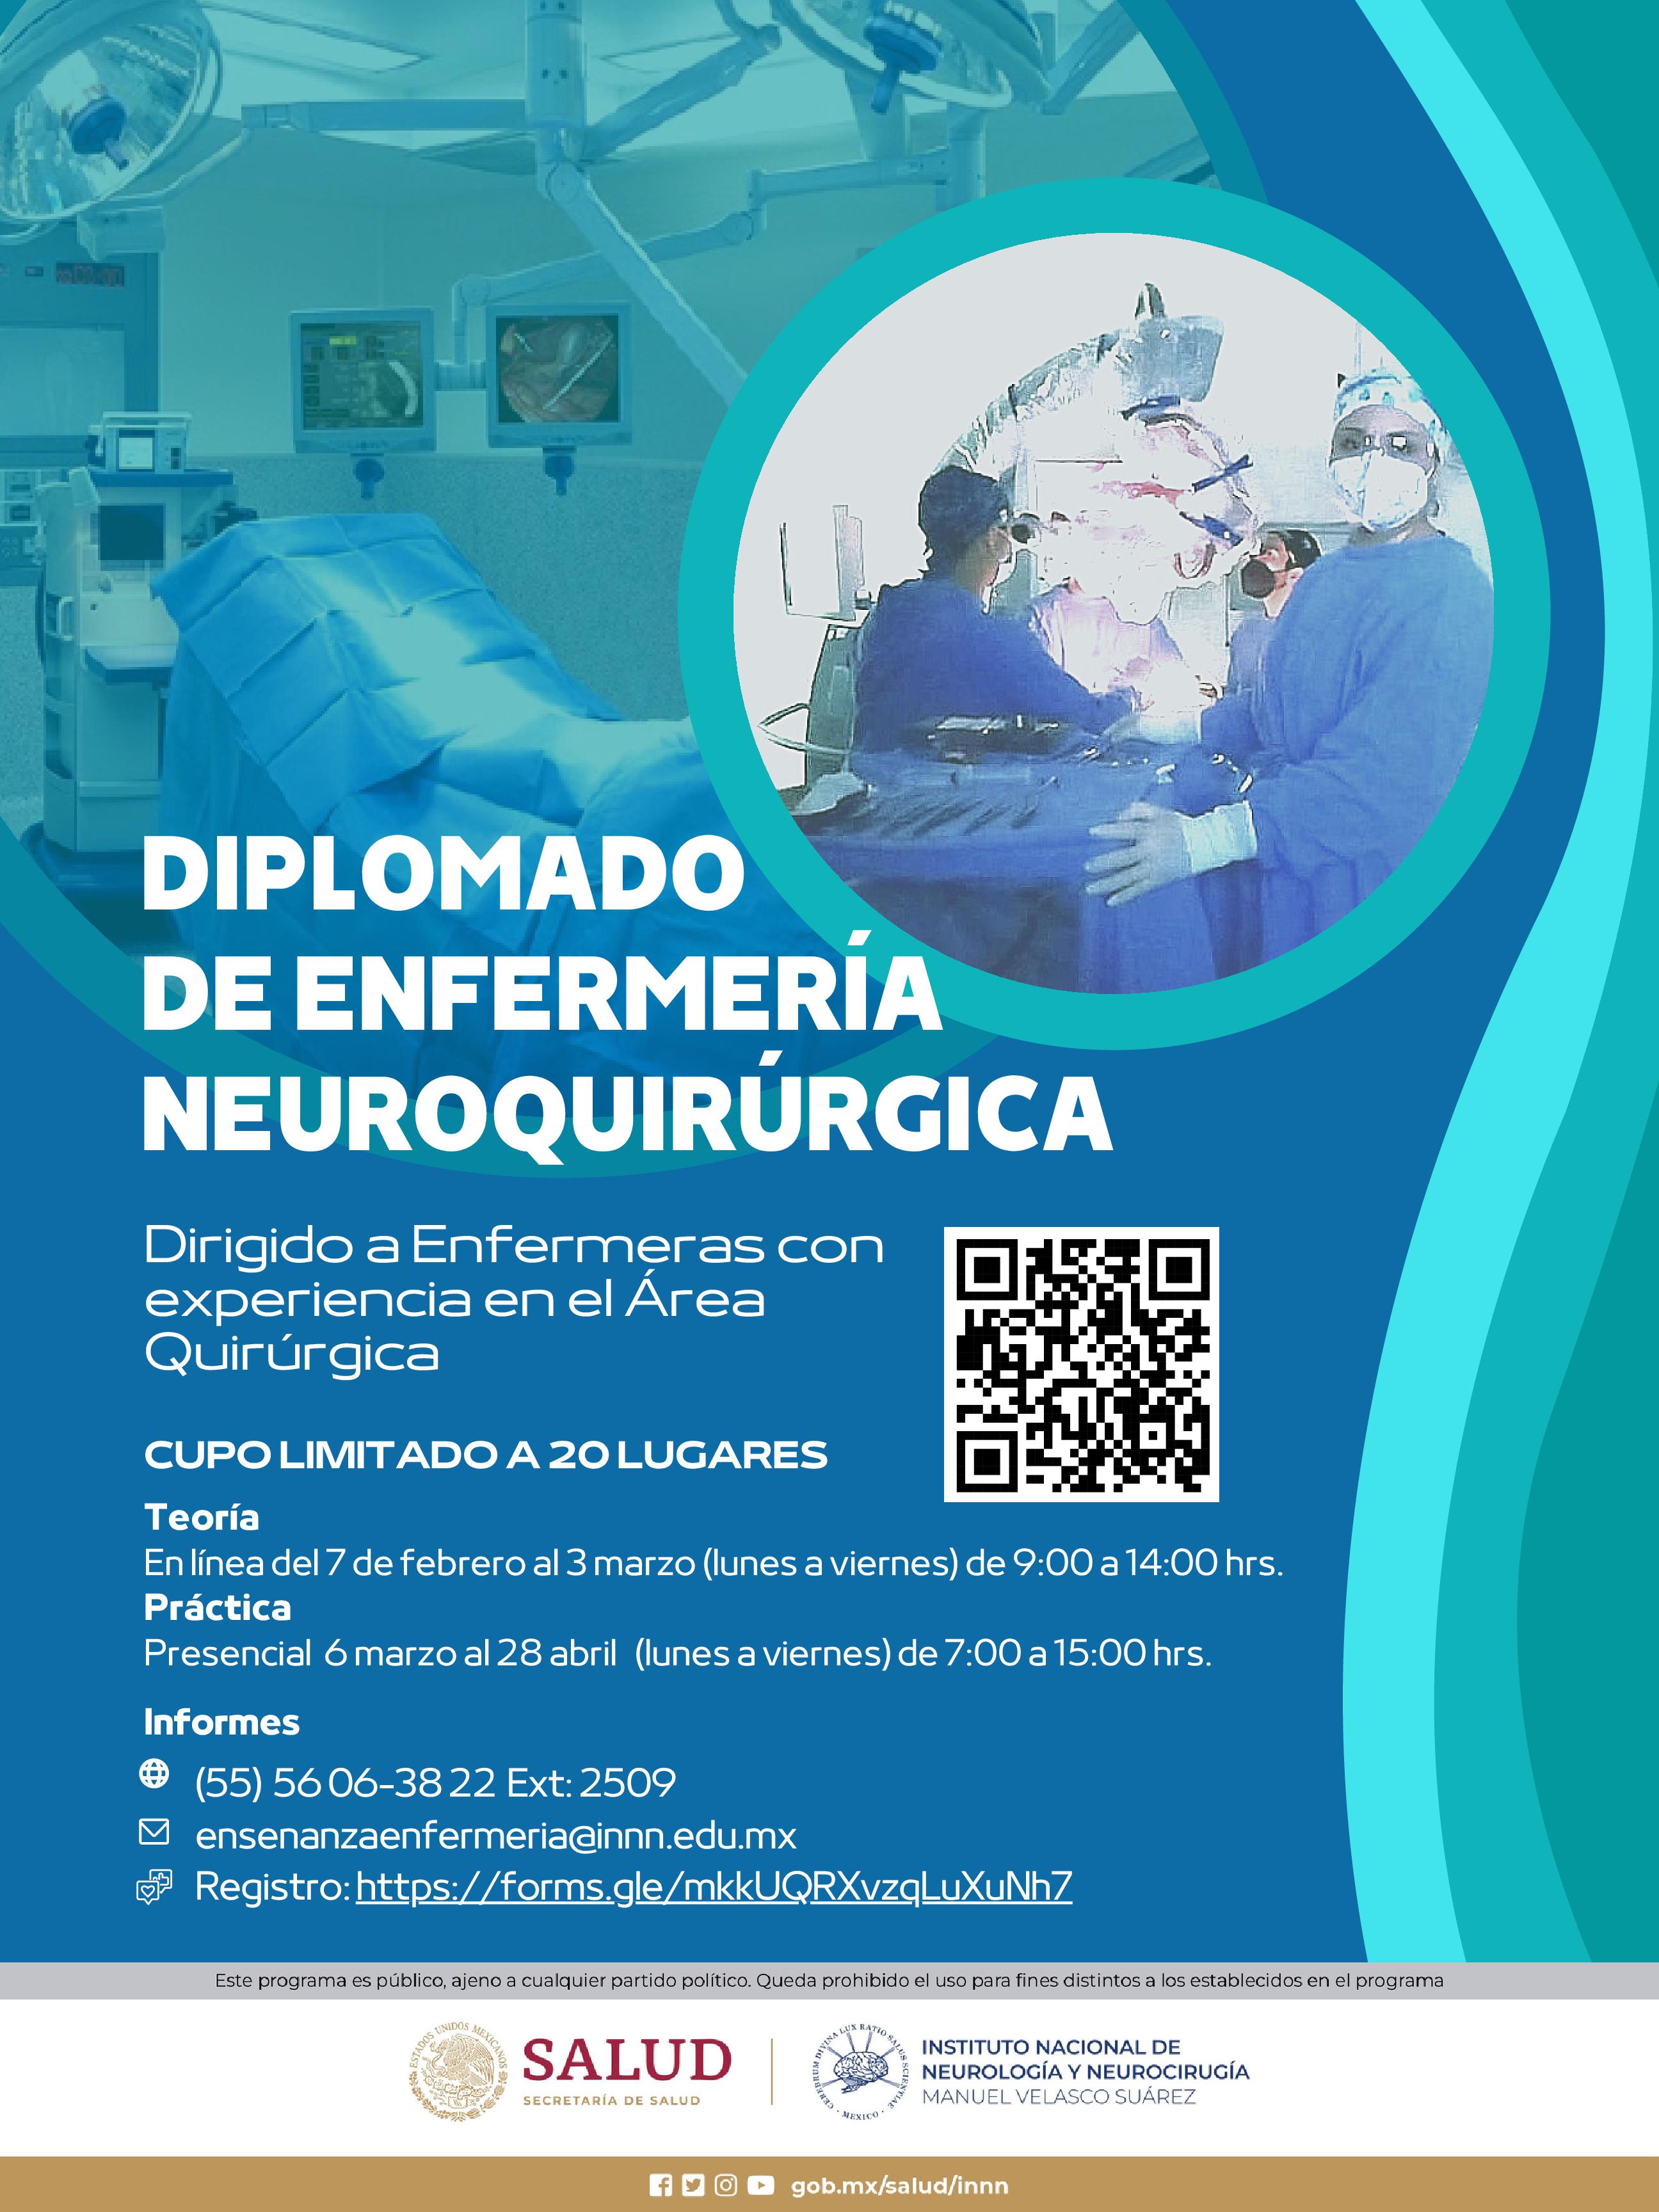 /cms/uploads/image/file/774316/Poster_de_Rehabilitacion_y_fisioterapia_profesional_azul__2_-001.jpg